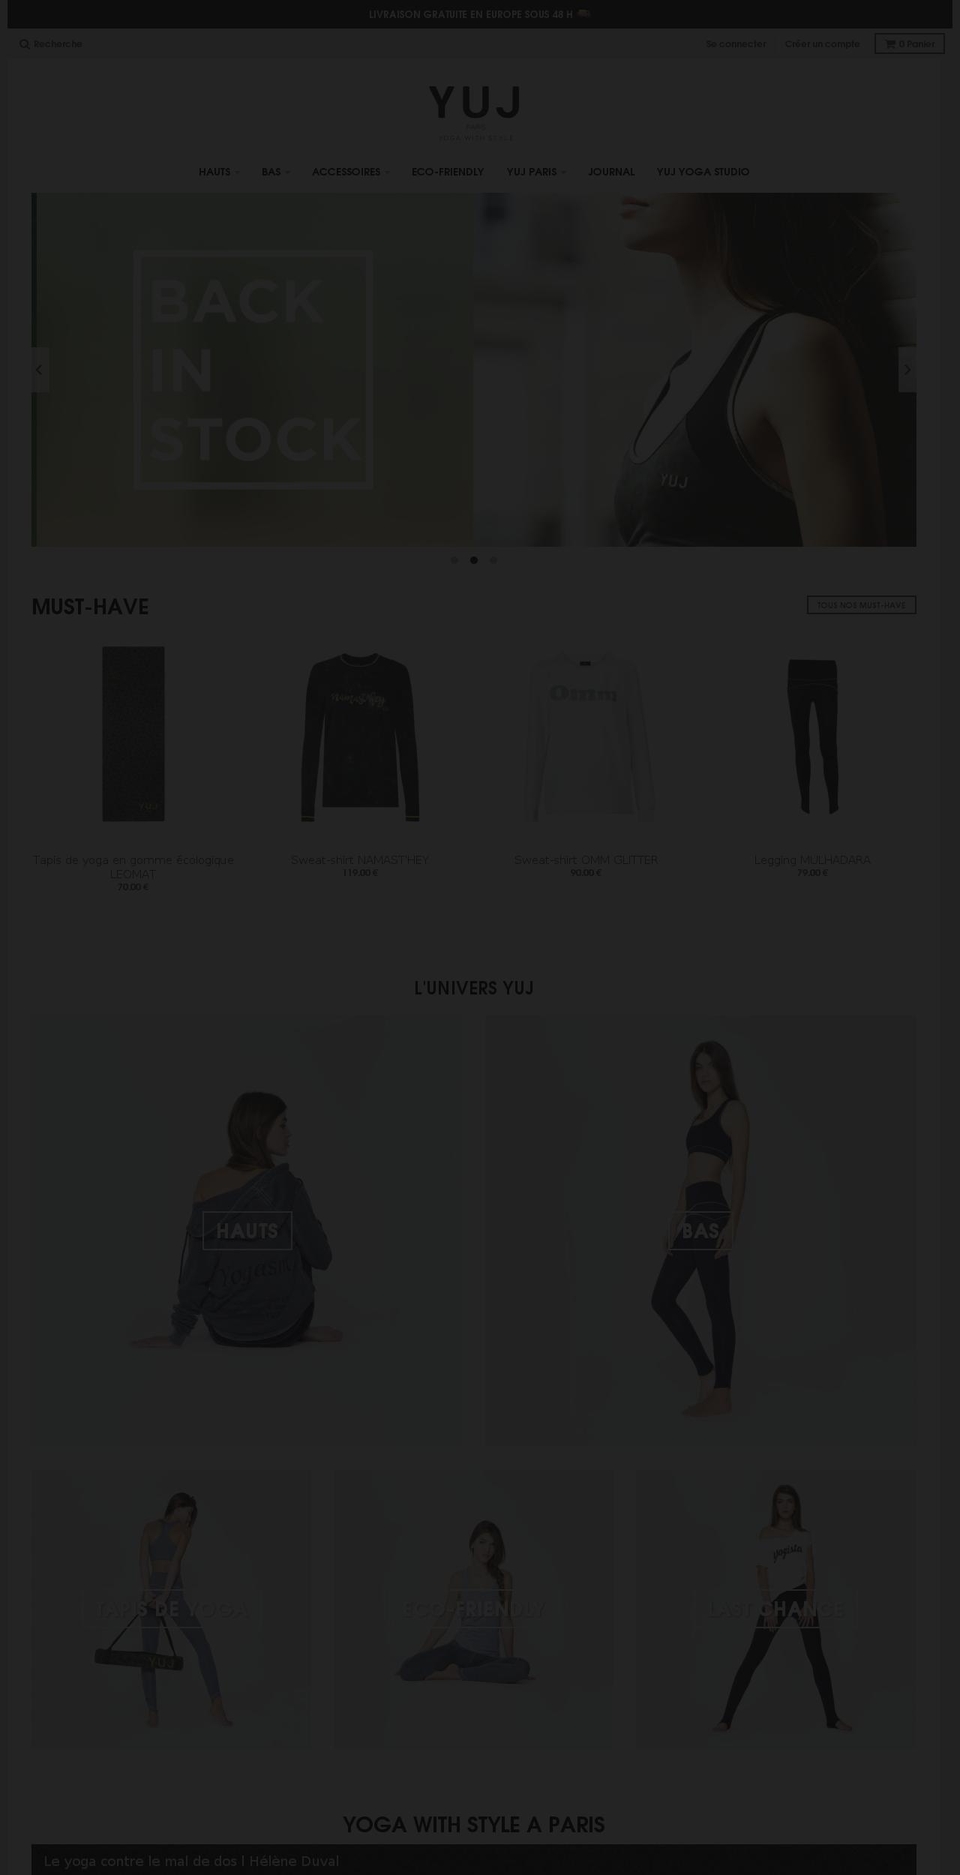 yuj.fr shopify website screenshot